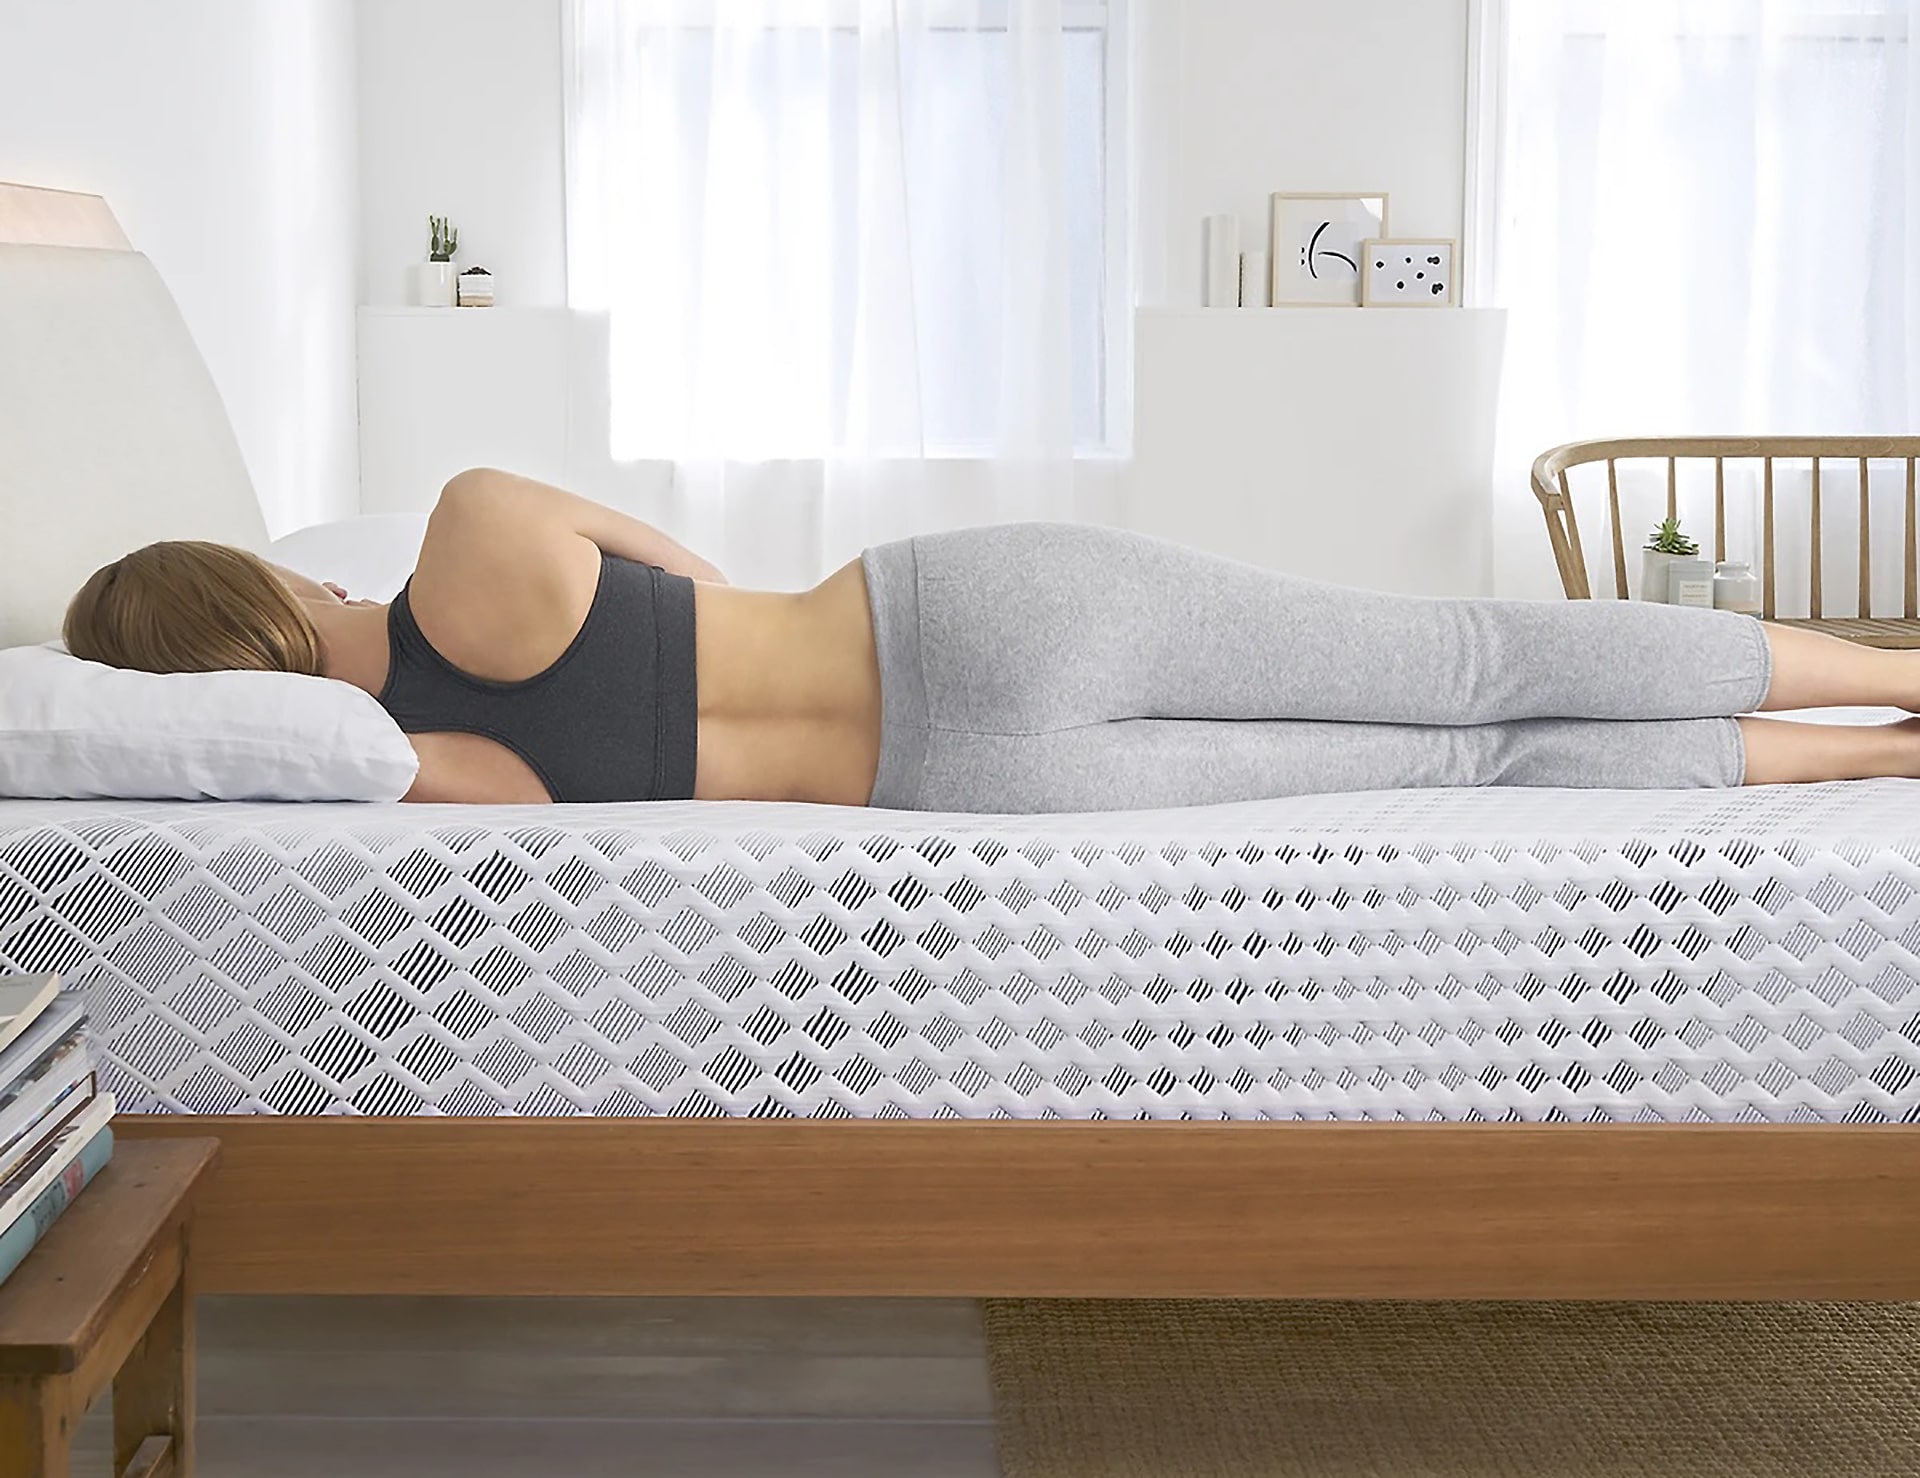 hardboard to make mattress firm